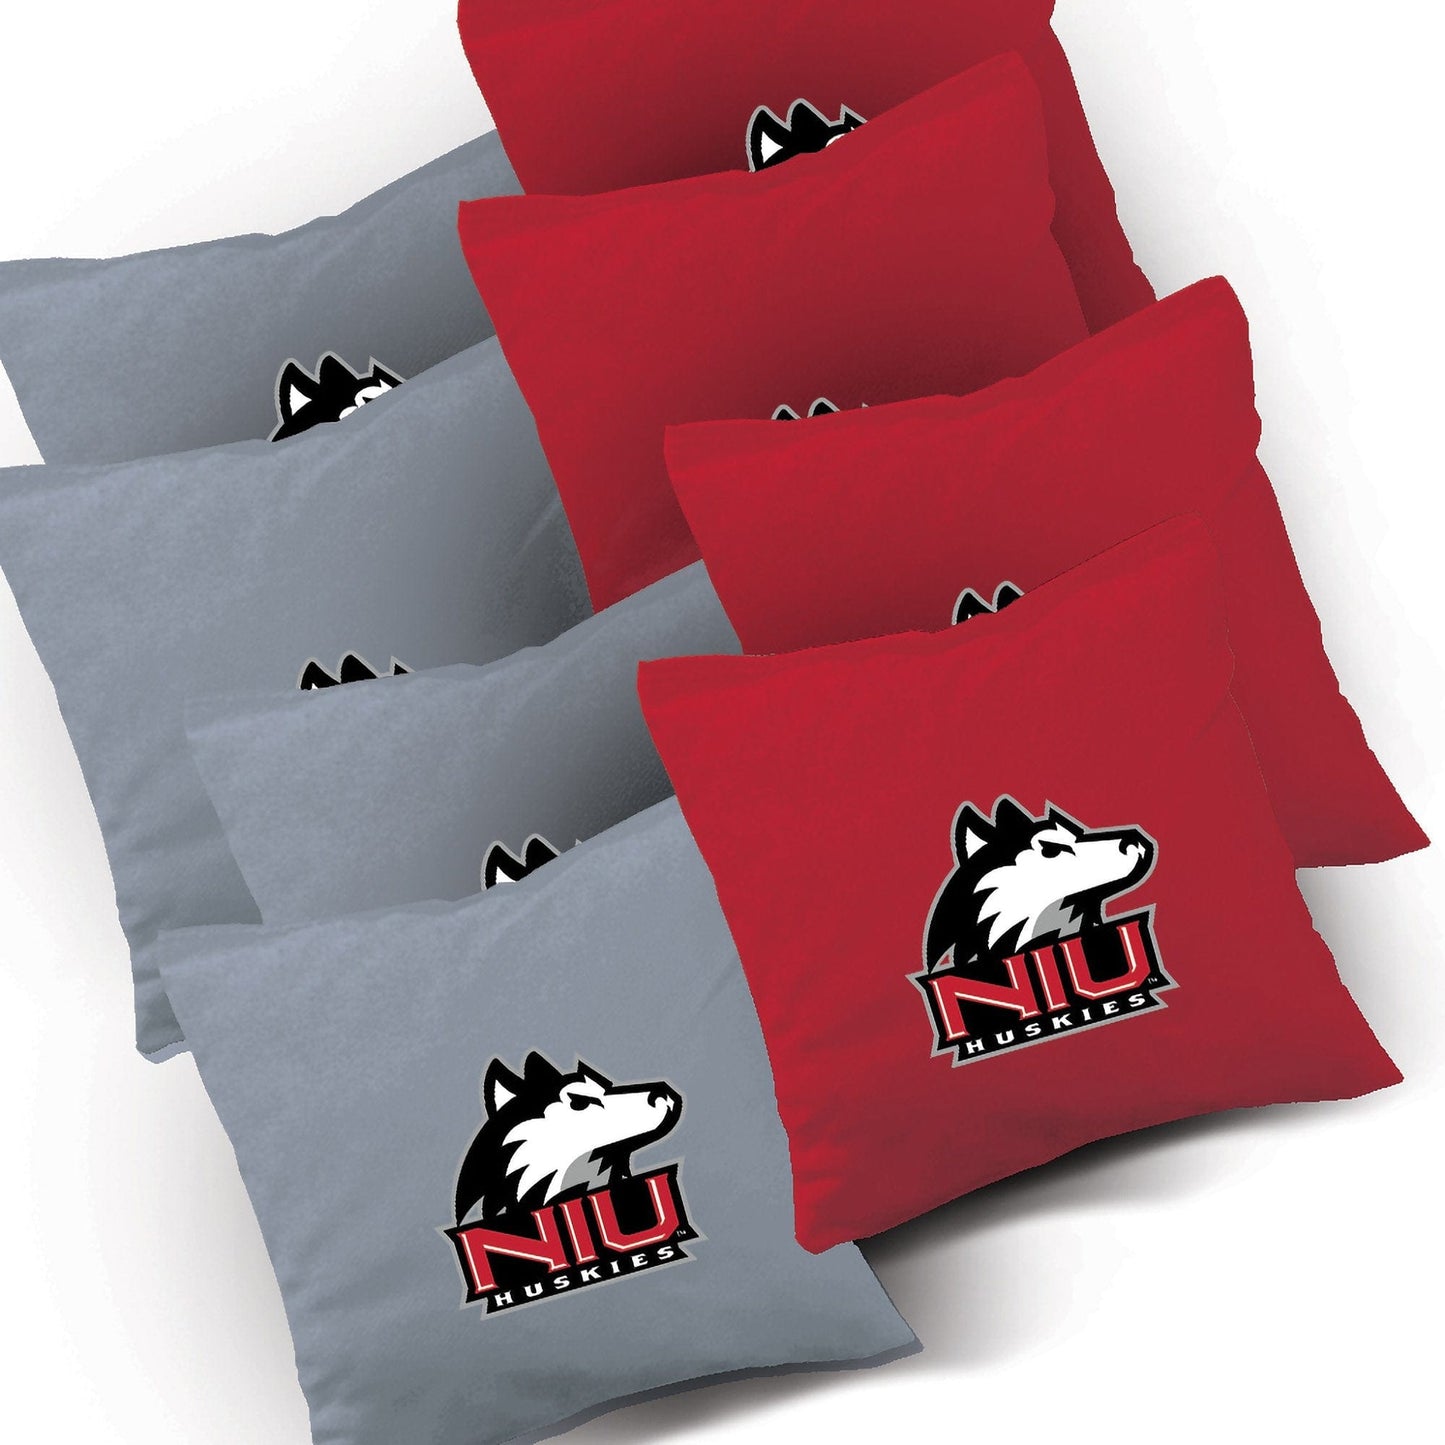 Northern Illinois Huskies Swoosh team logo bags